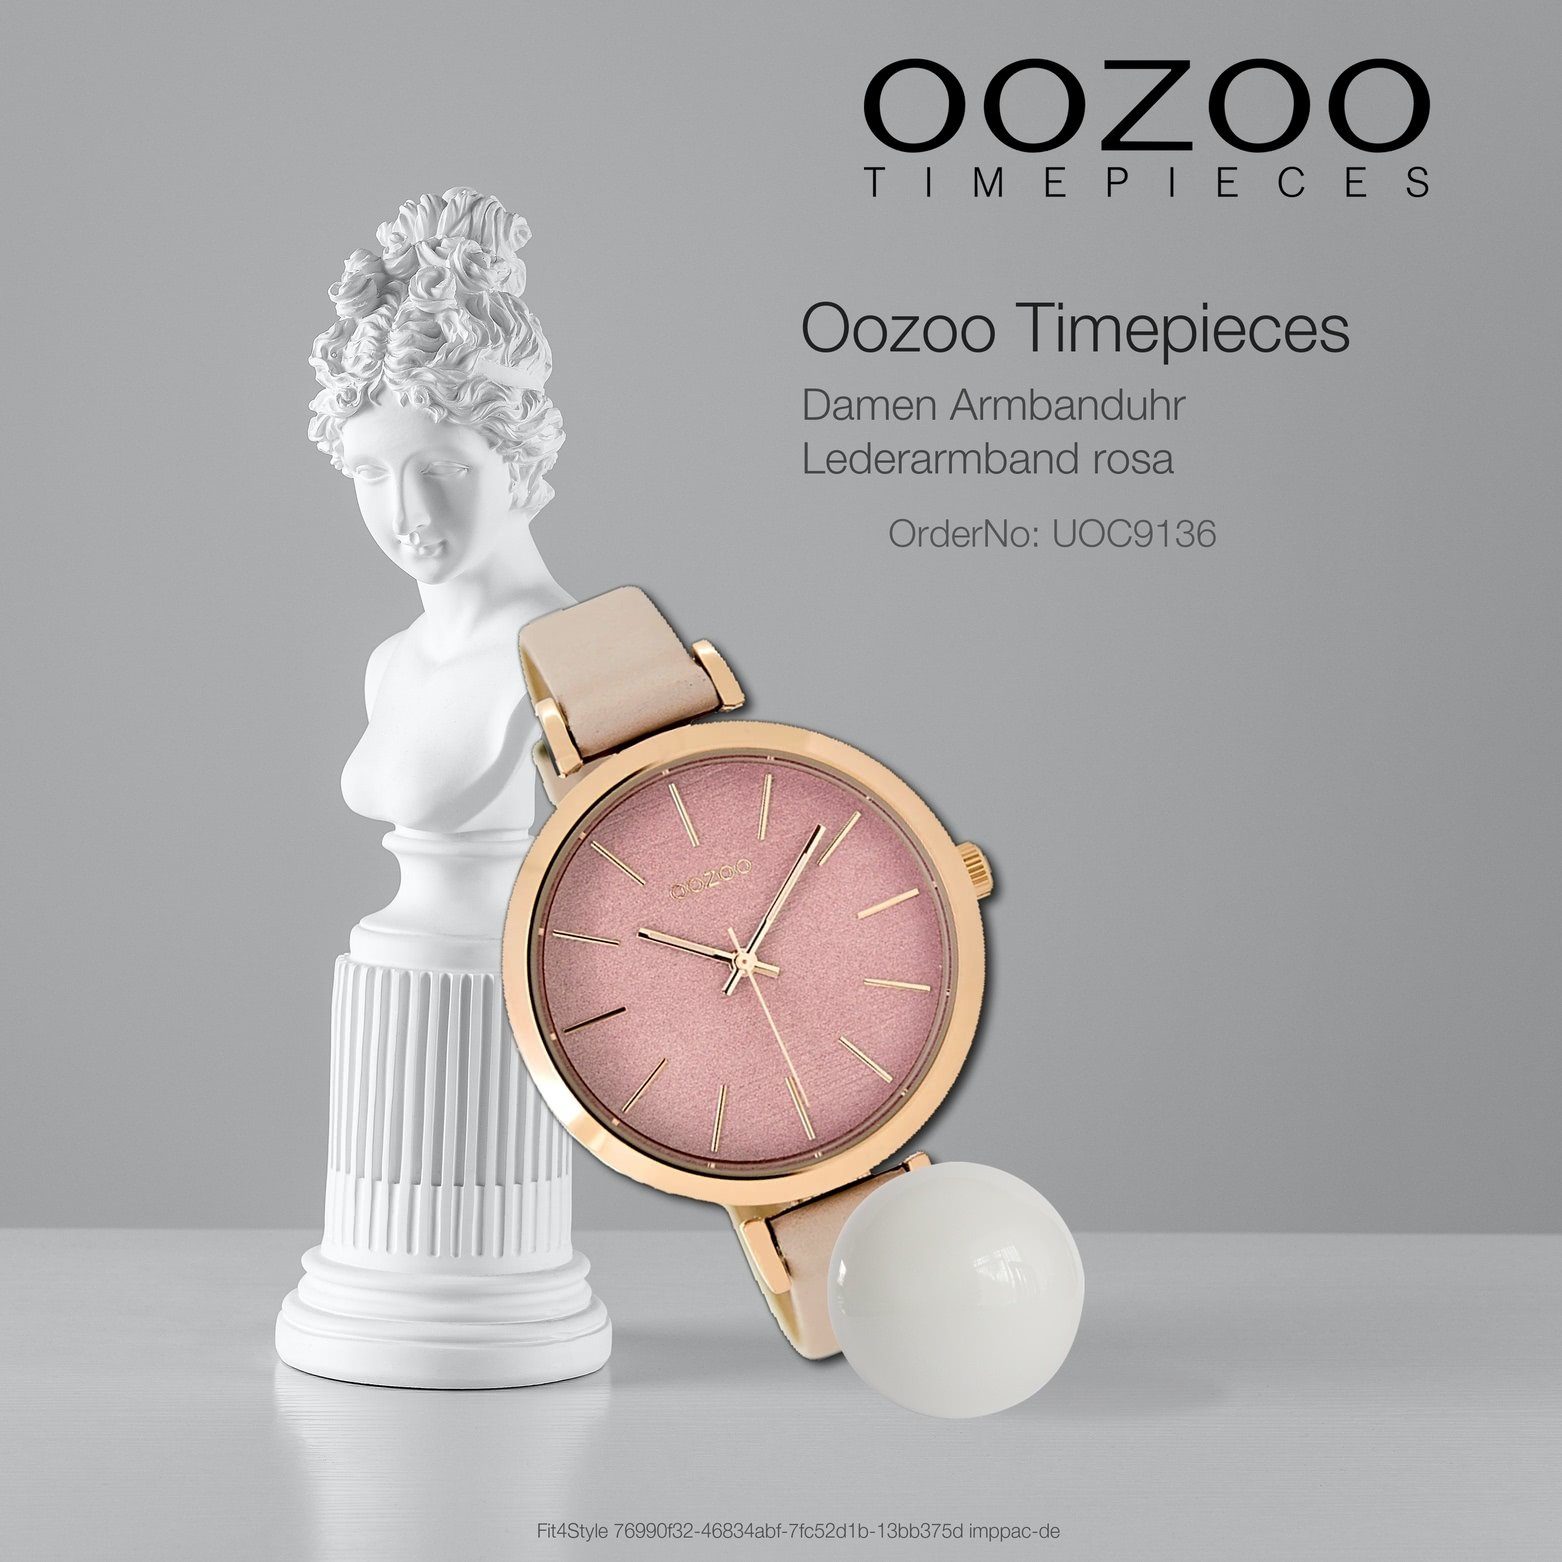 Damen Lederarmband, (ca. OOZOO Oozoo Quarzuhr Armbanduhr 40mm) rund, Damenuhr groß rosegold, Fashion-Style